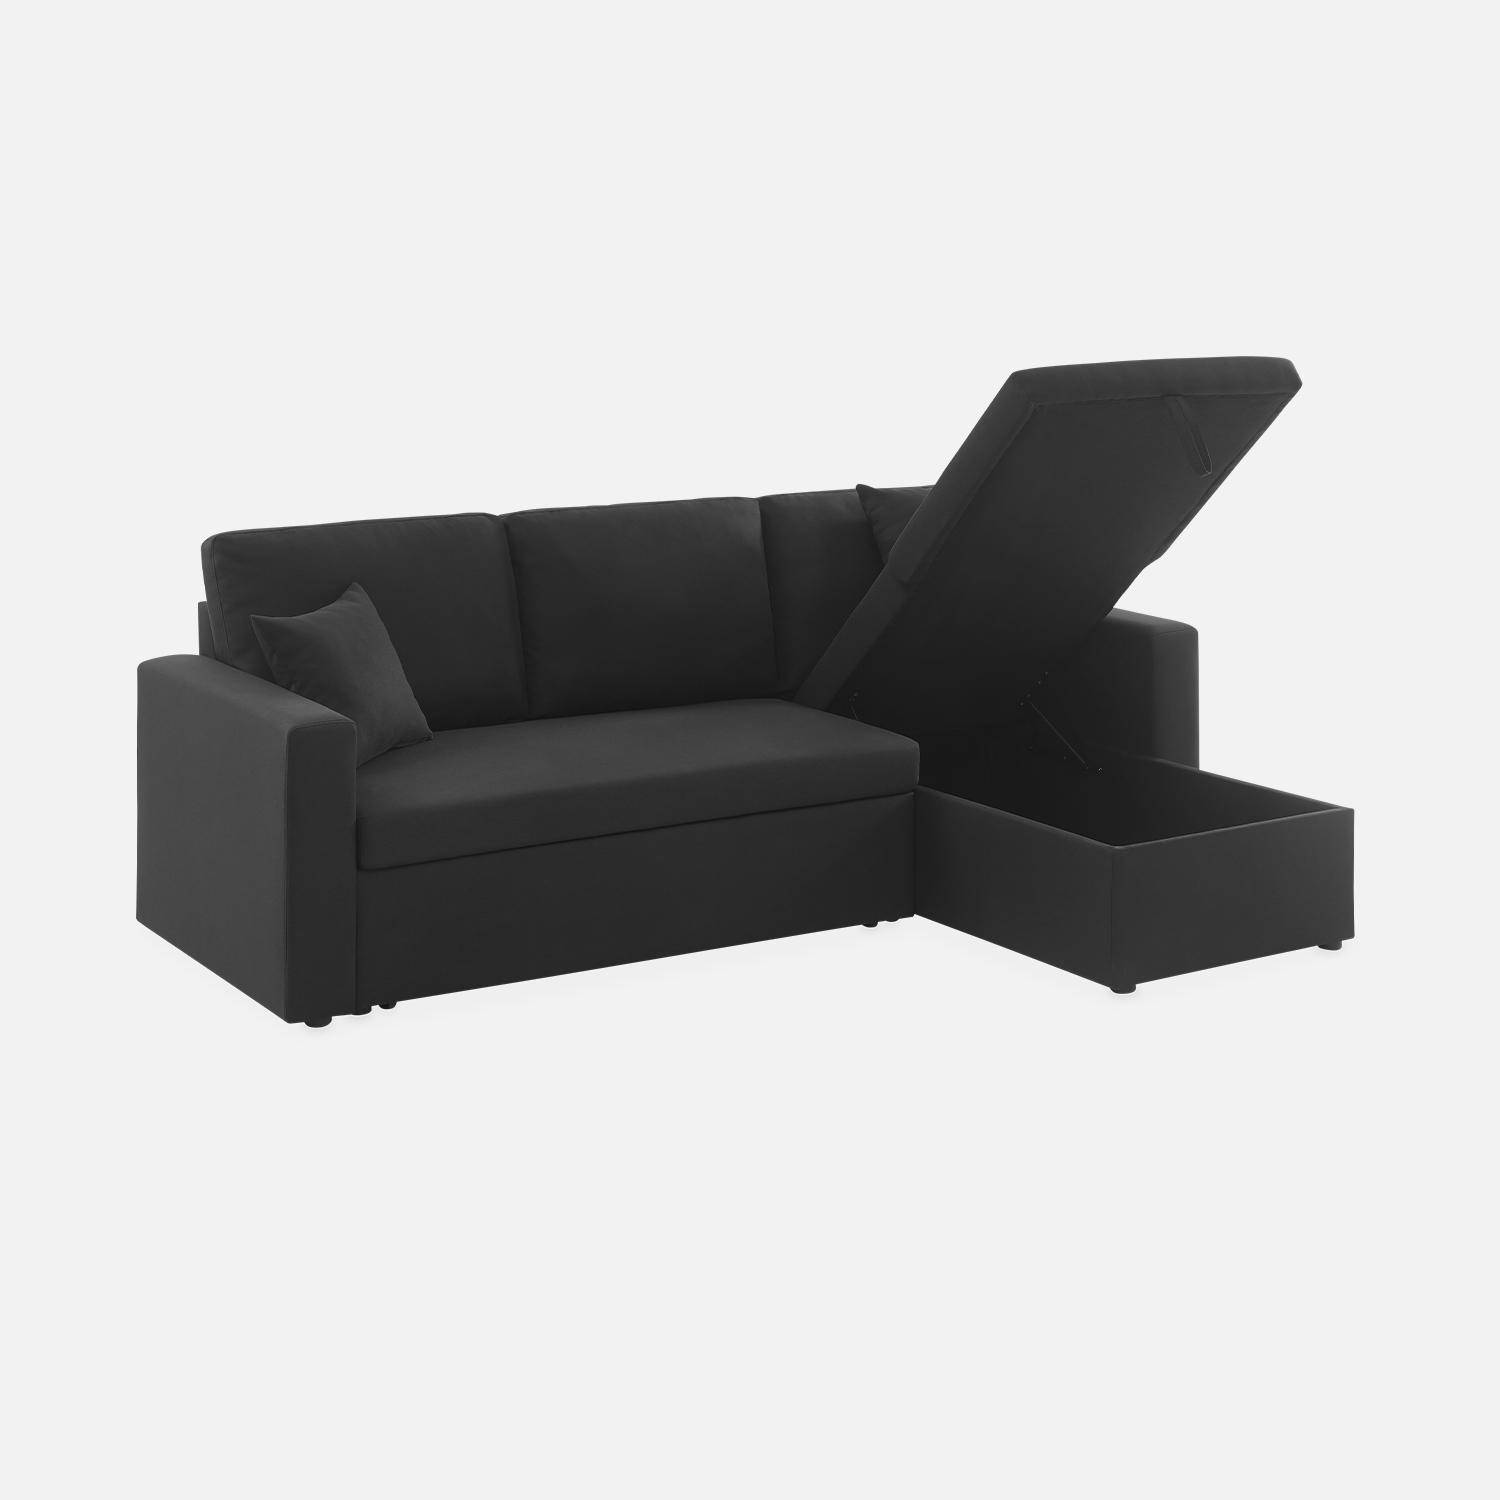 3-seater reversible black corner sofa bed with storage box, black L219xD81xH68cm, IDA Photo8